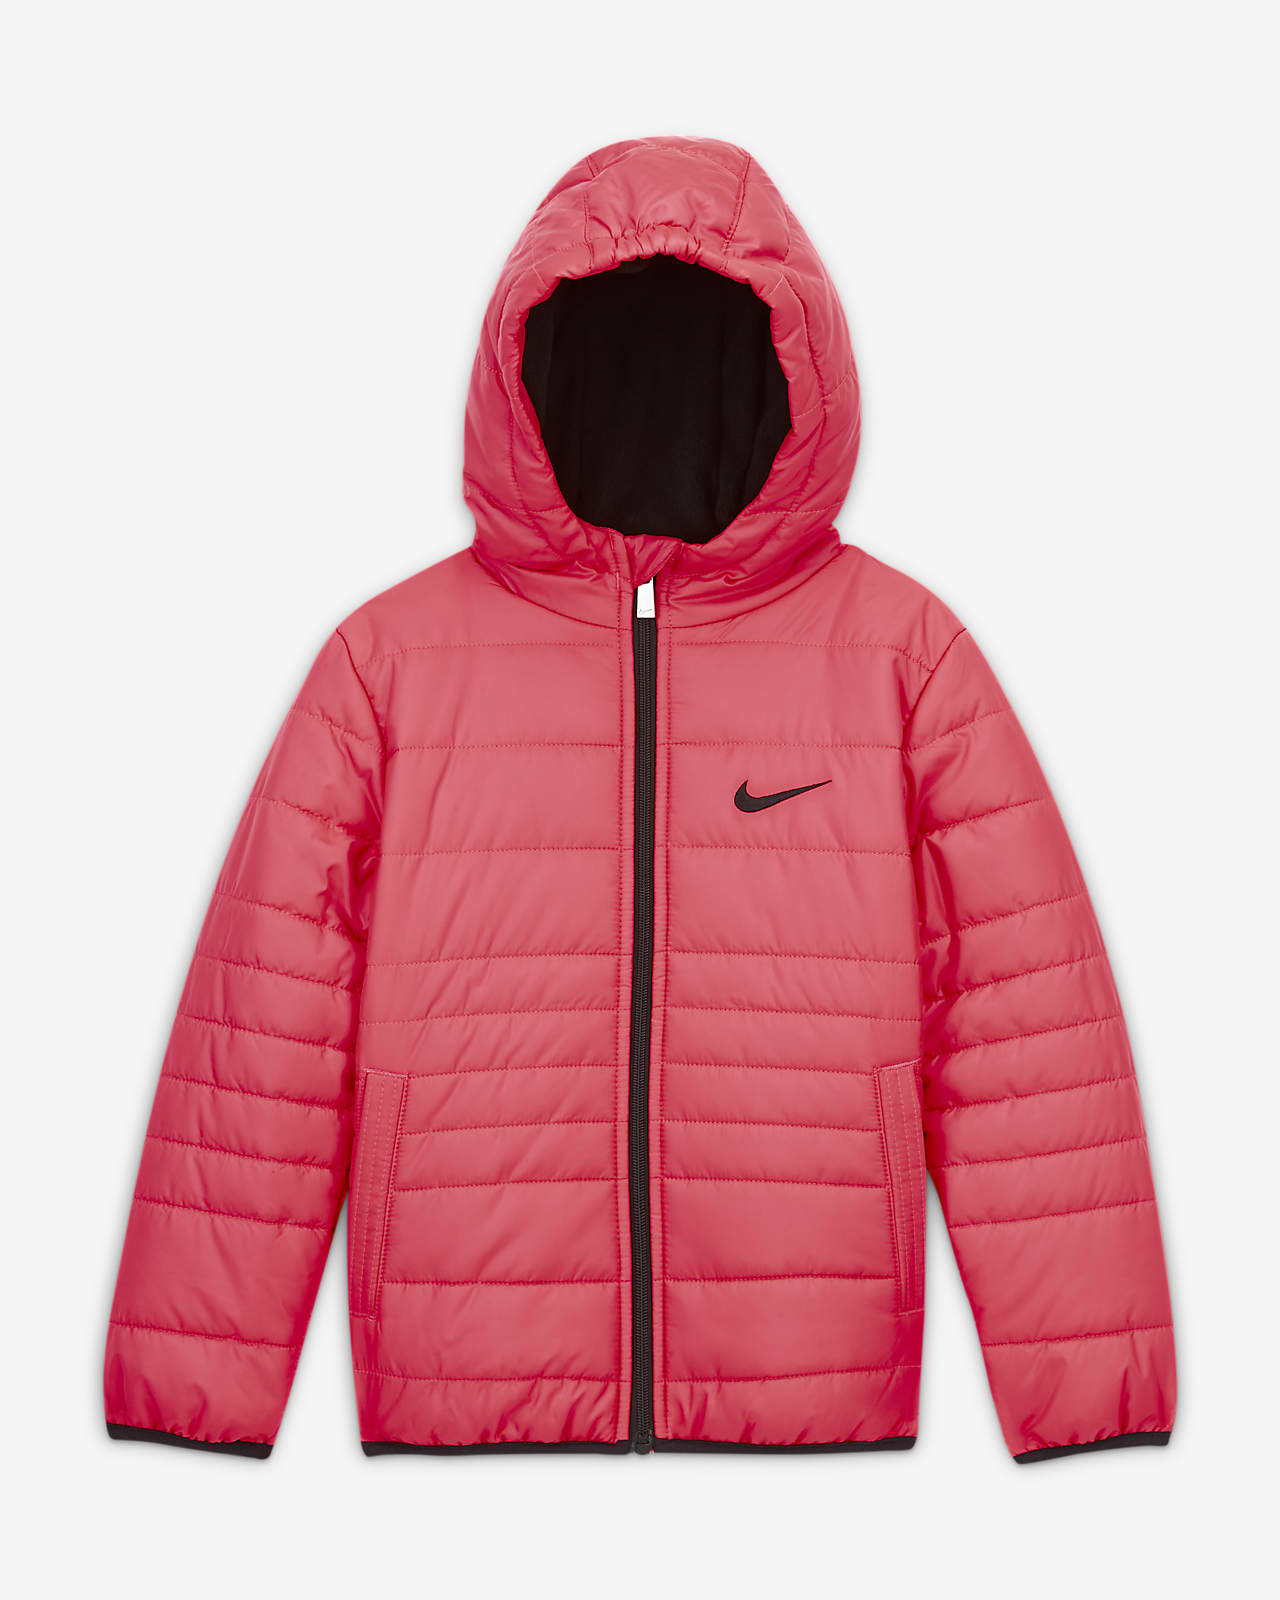 Nike Puffer-Jacke für jüngere Kinder